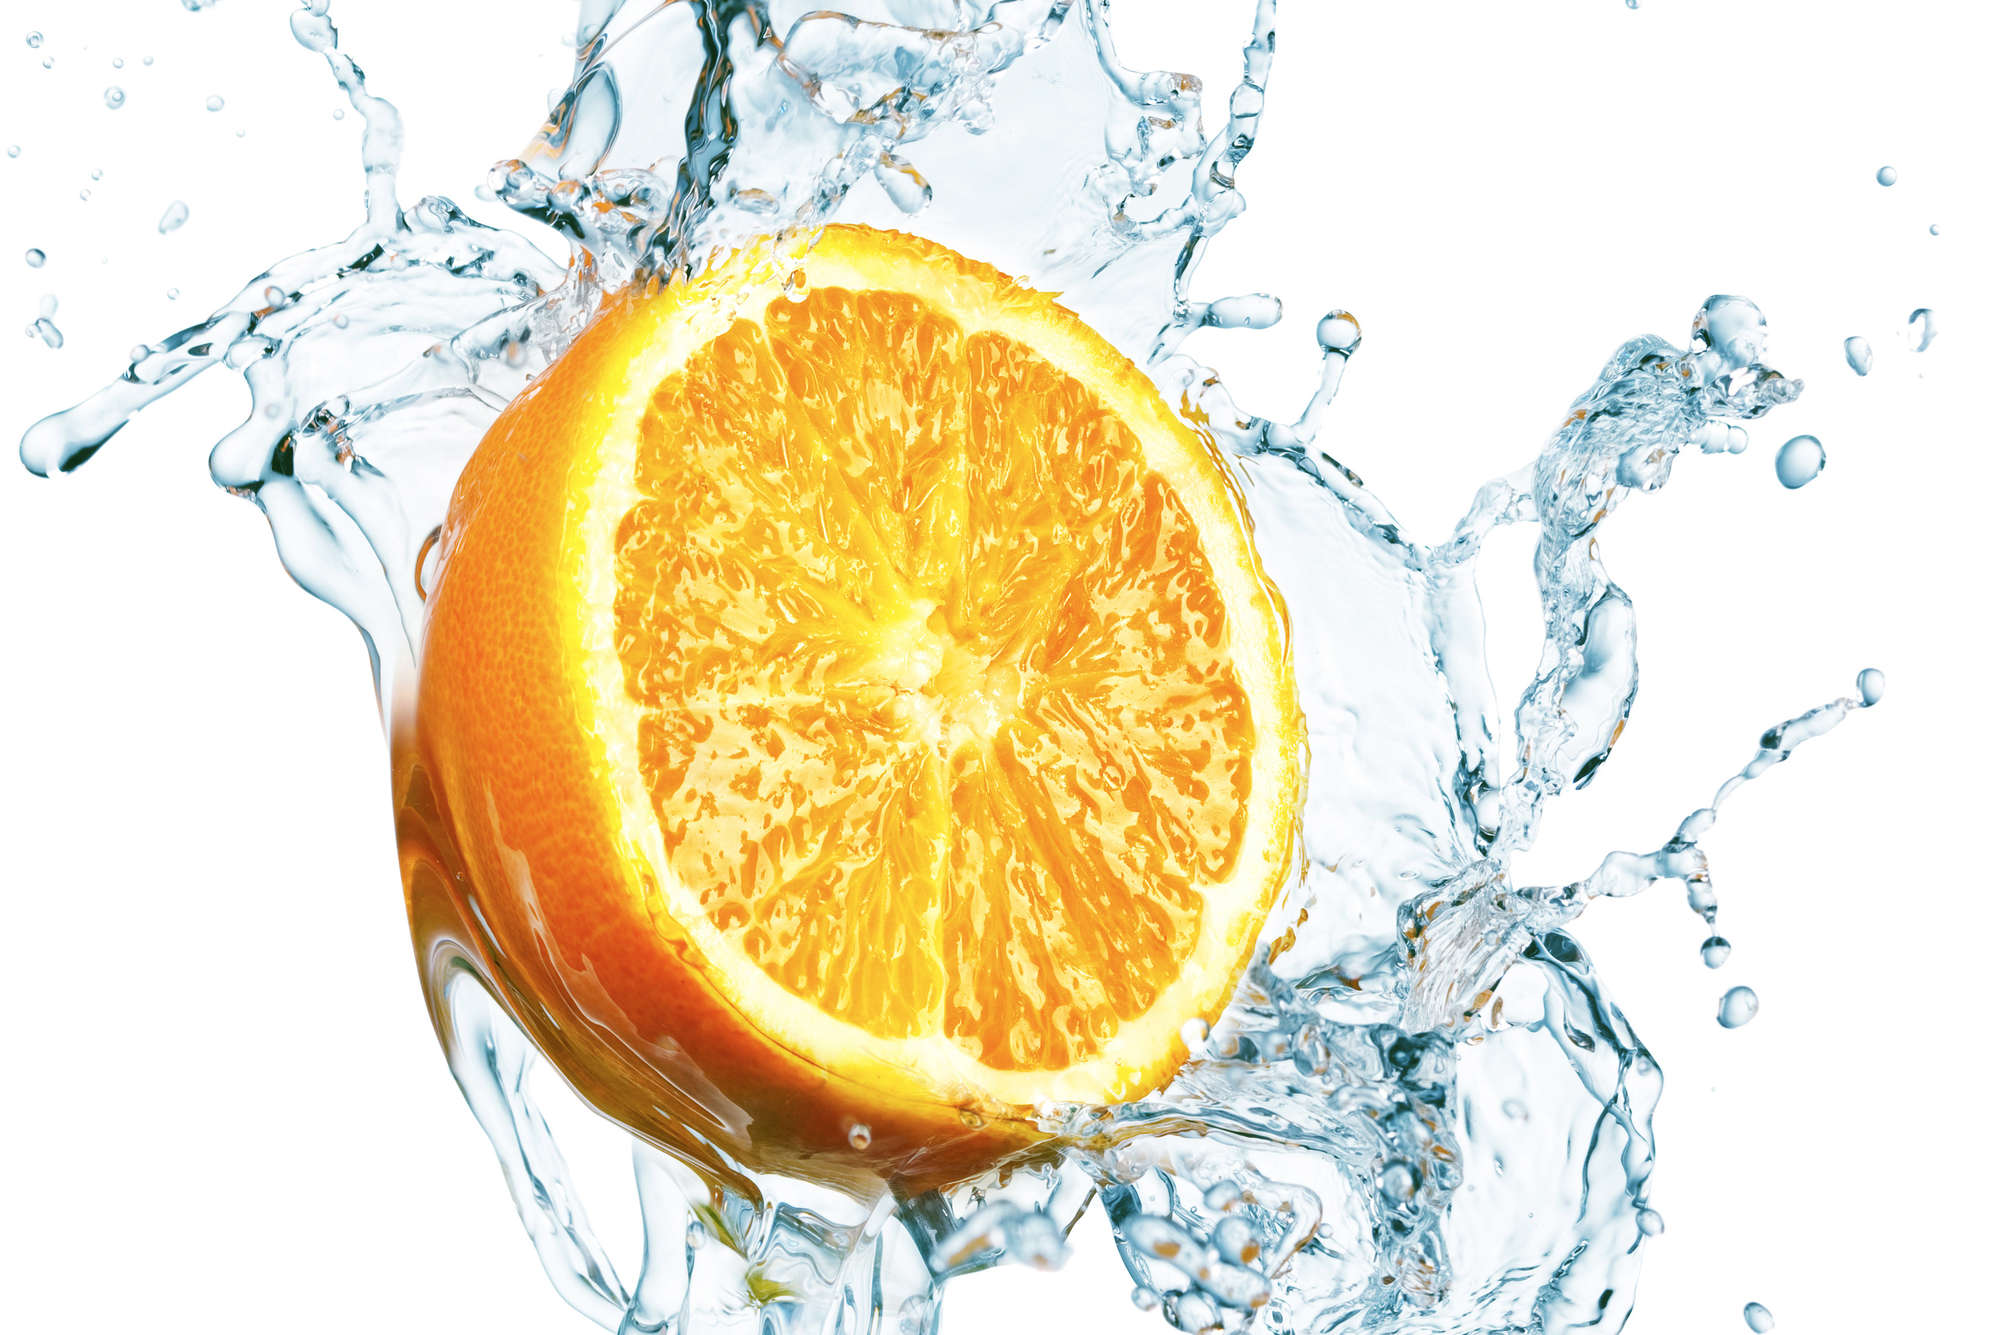             Orange in the Water Wallpaper - Premium Smooth Non-woven
        